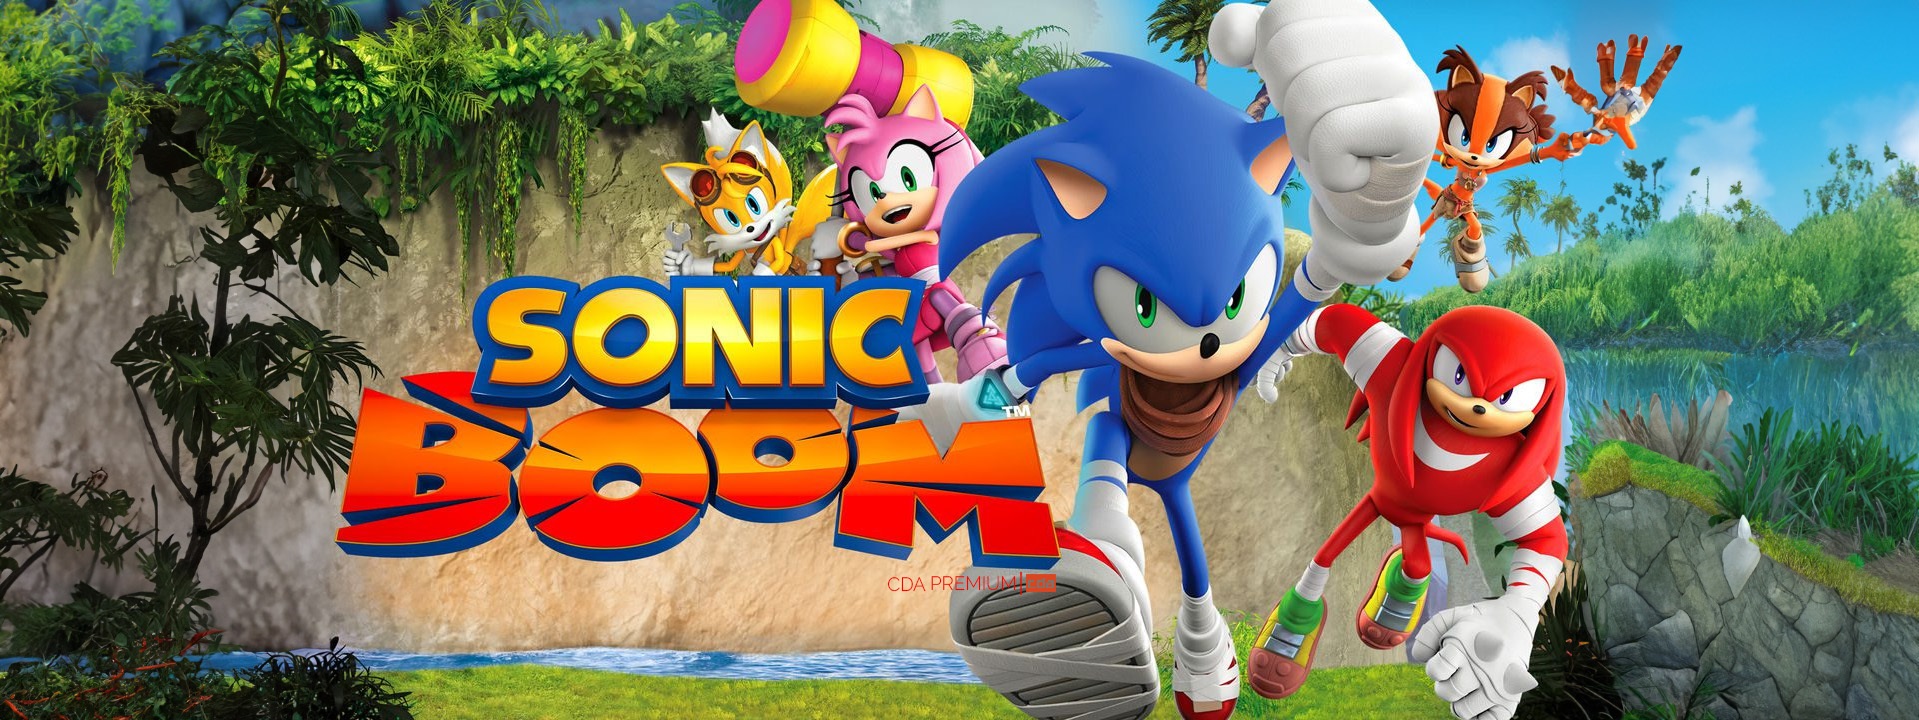 Sonic Boom Odcinek 1